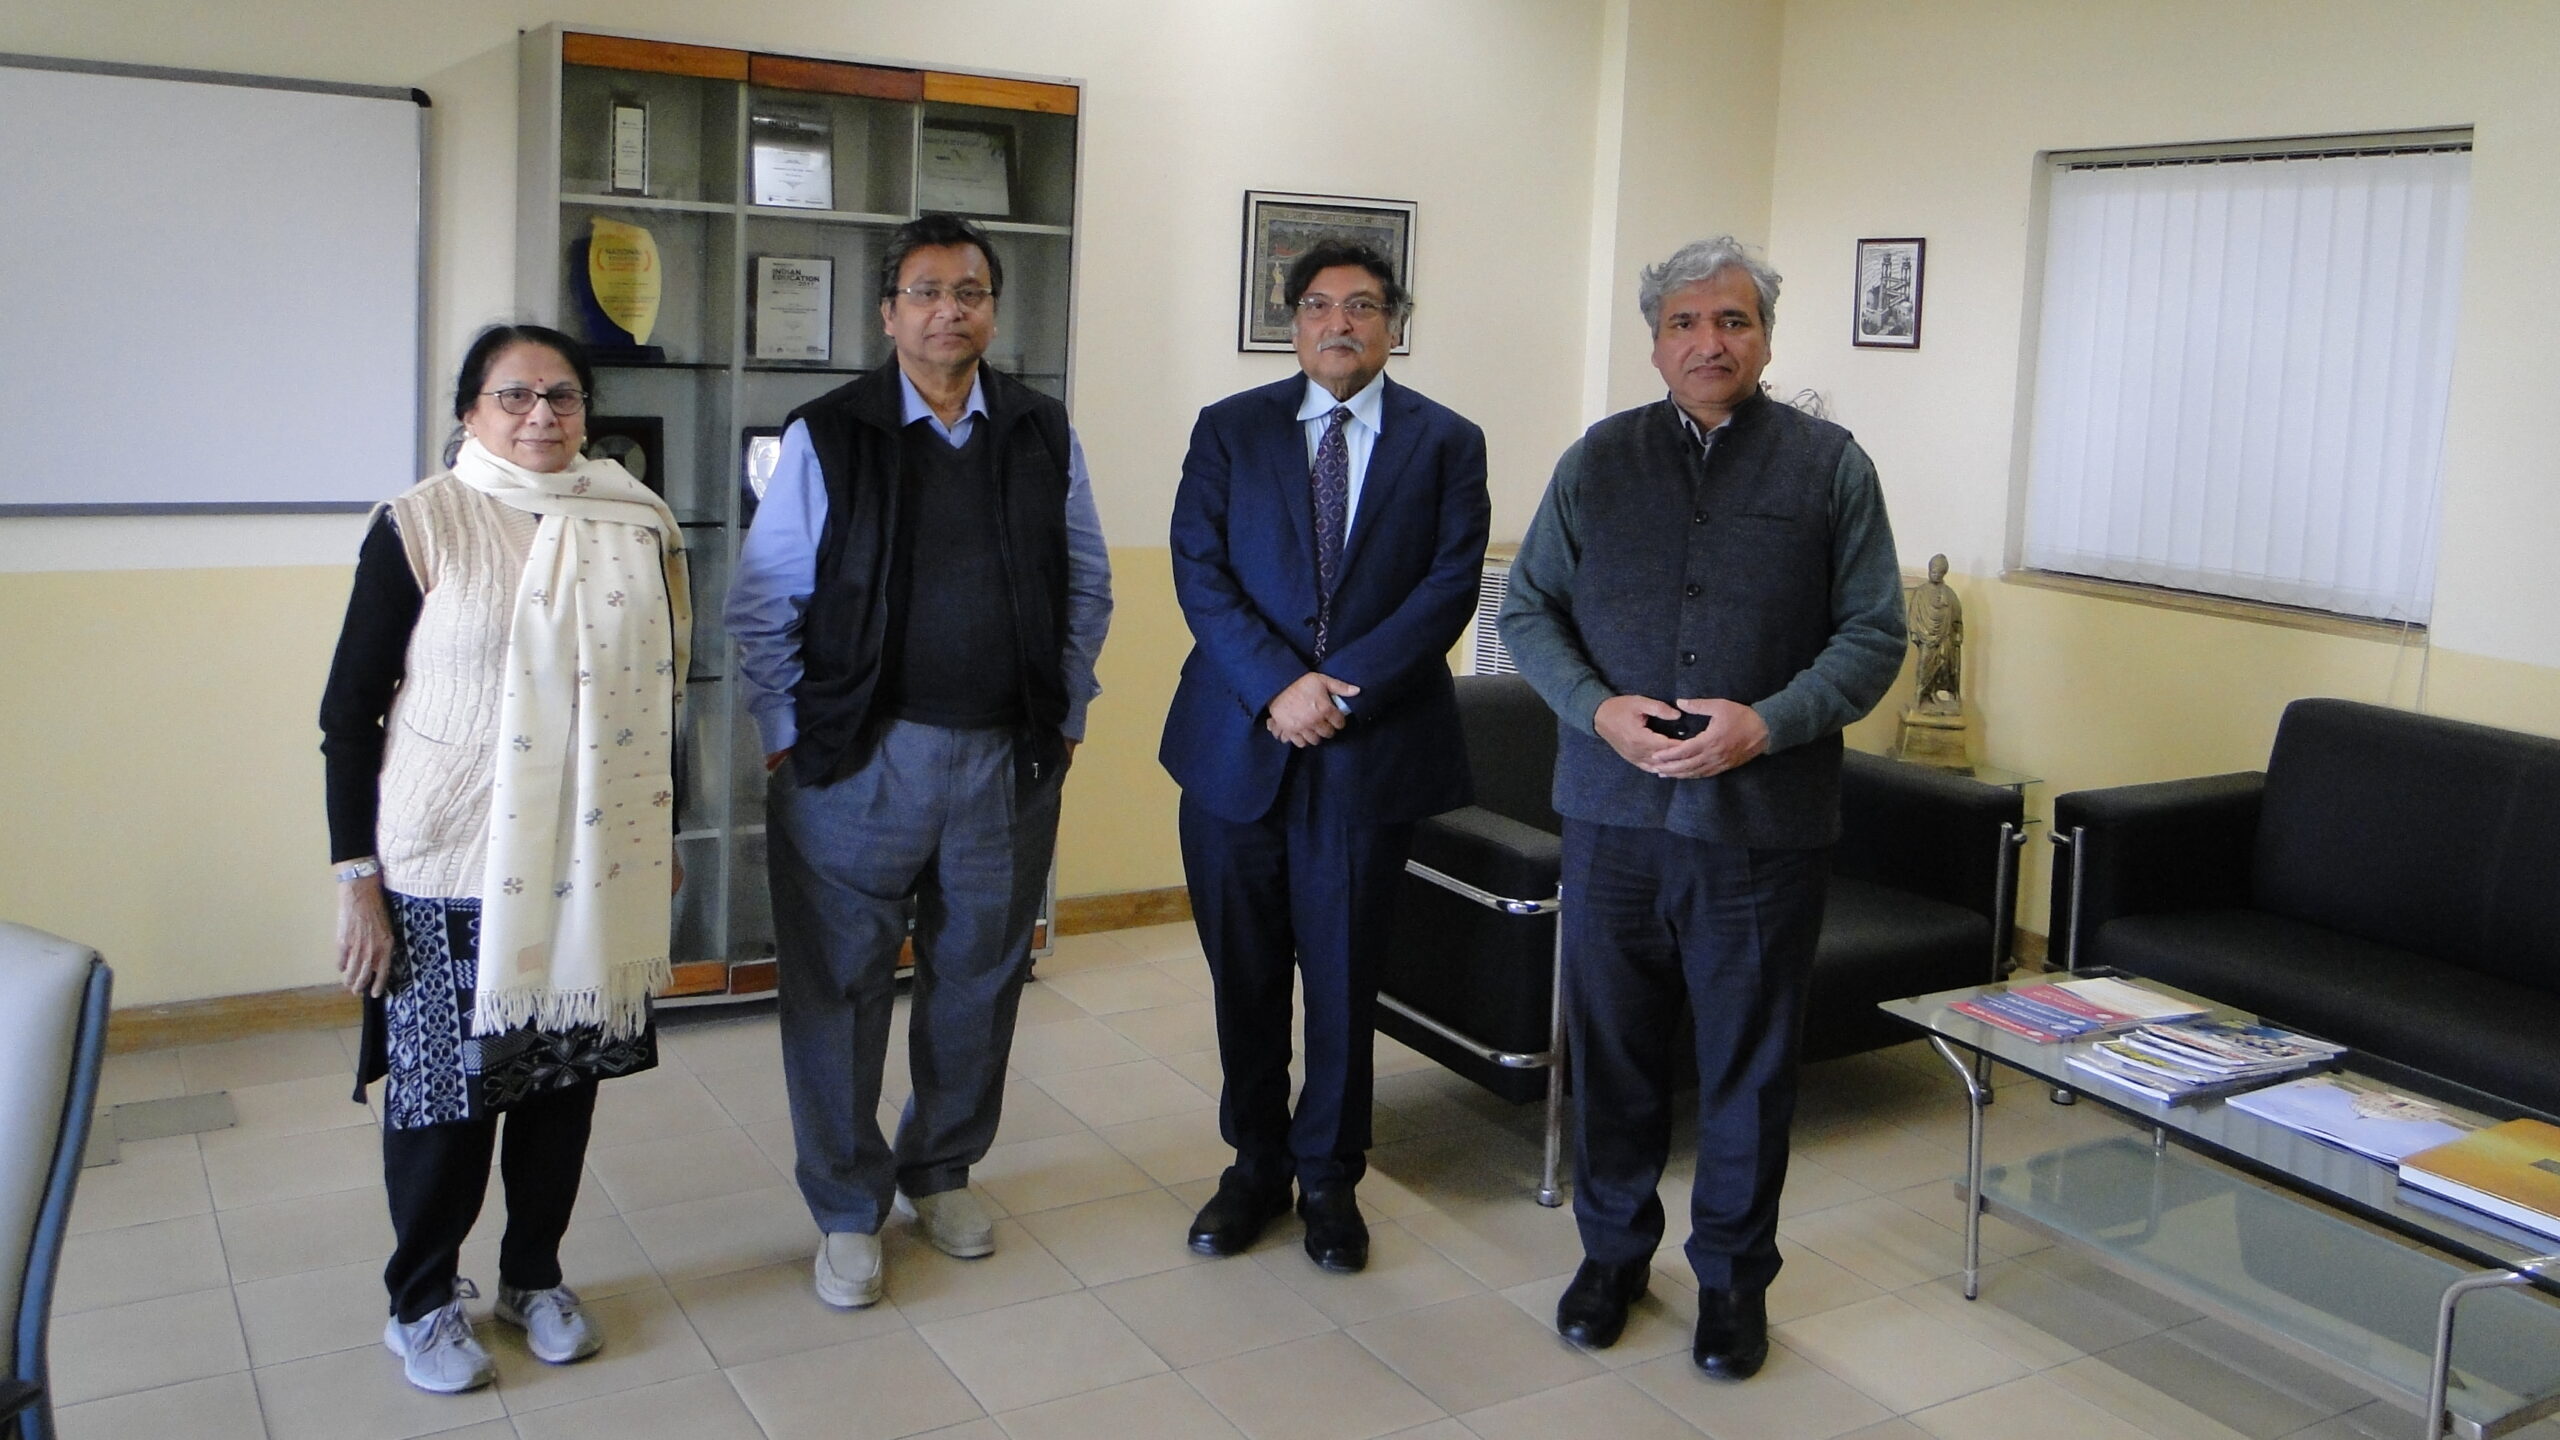 Prof. Parimal V Mandke, Prof. Debashis Sengupta, Prof. Sugata Mitra and Prof. Rajesh Khanna (left to right) at NIIT University